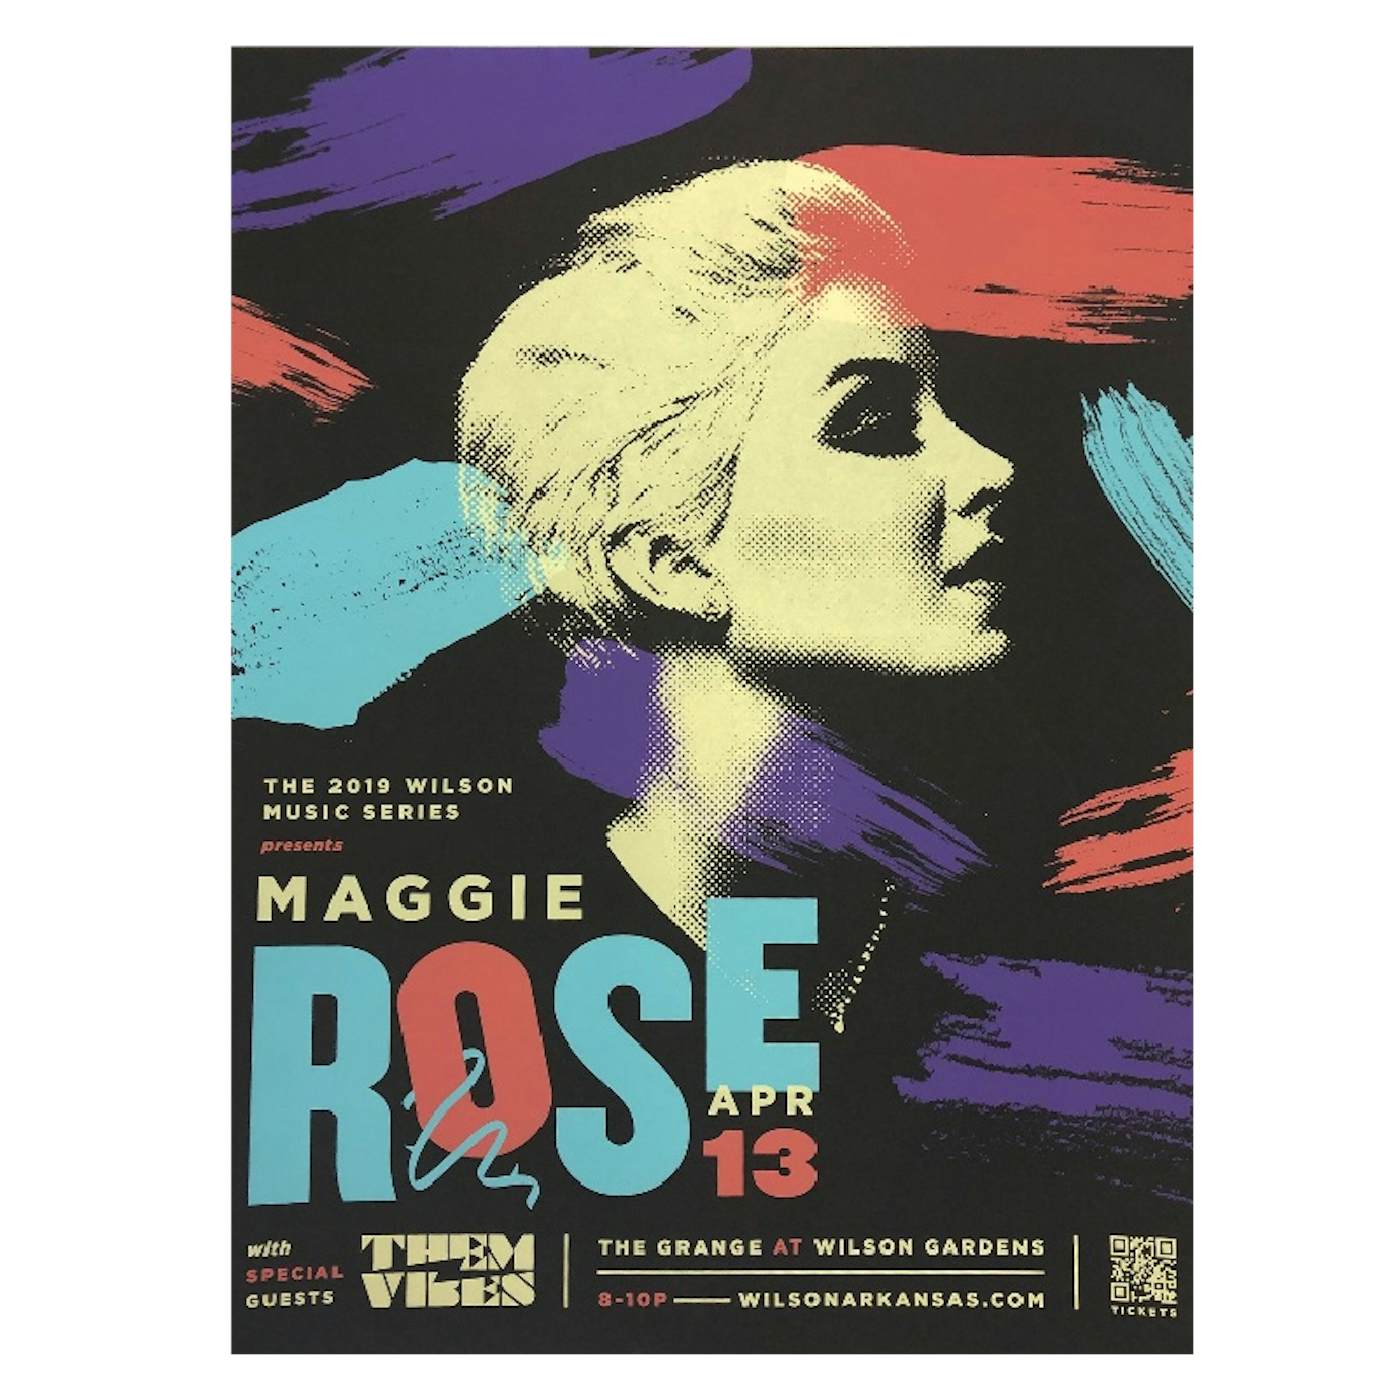 Maggie Rose 2019 WILSON MUSIC SERIES POSTER